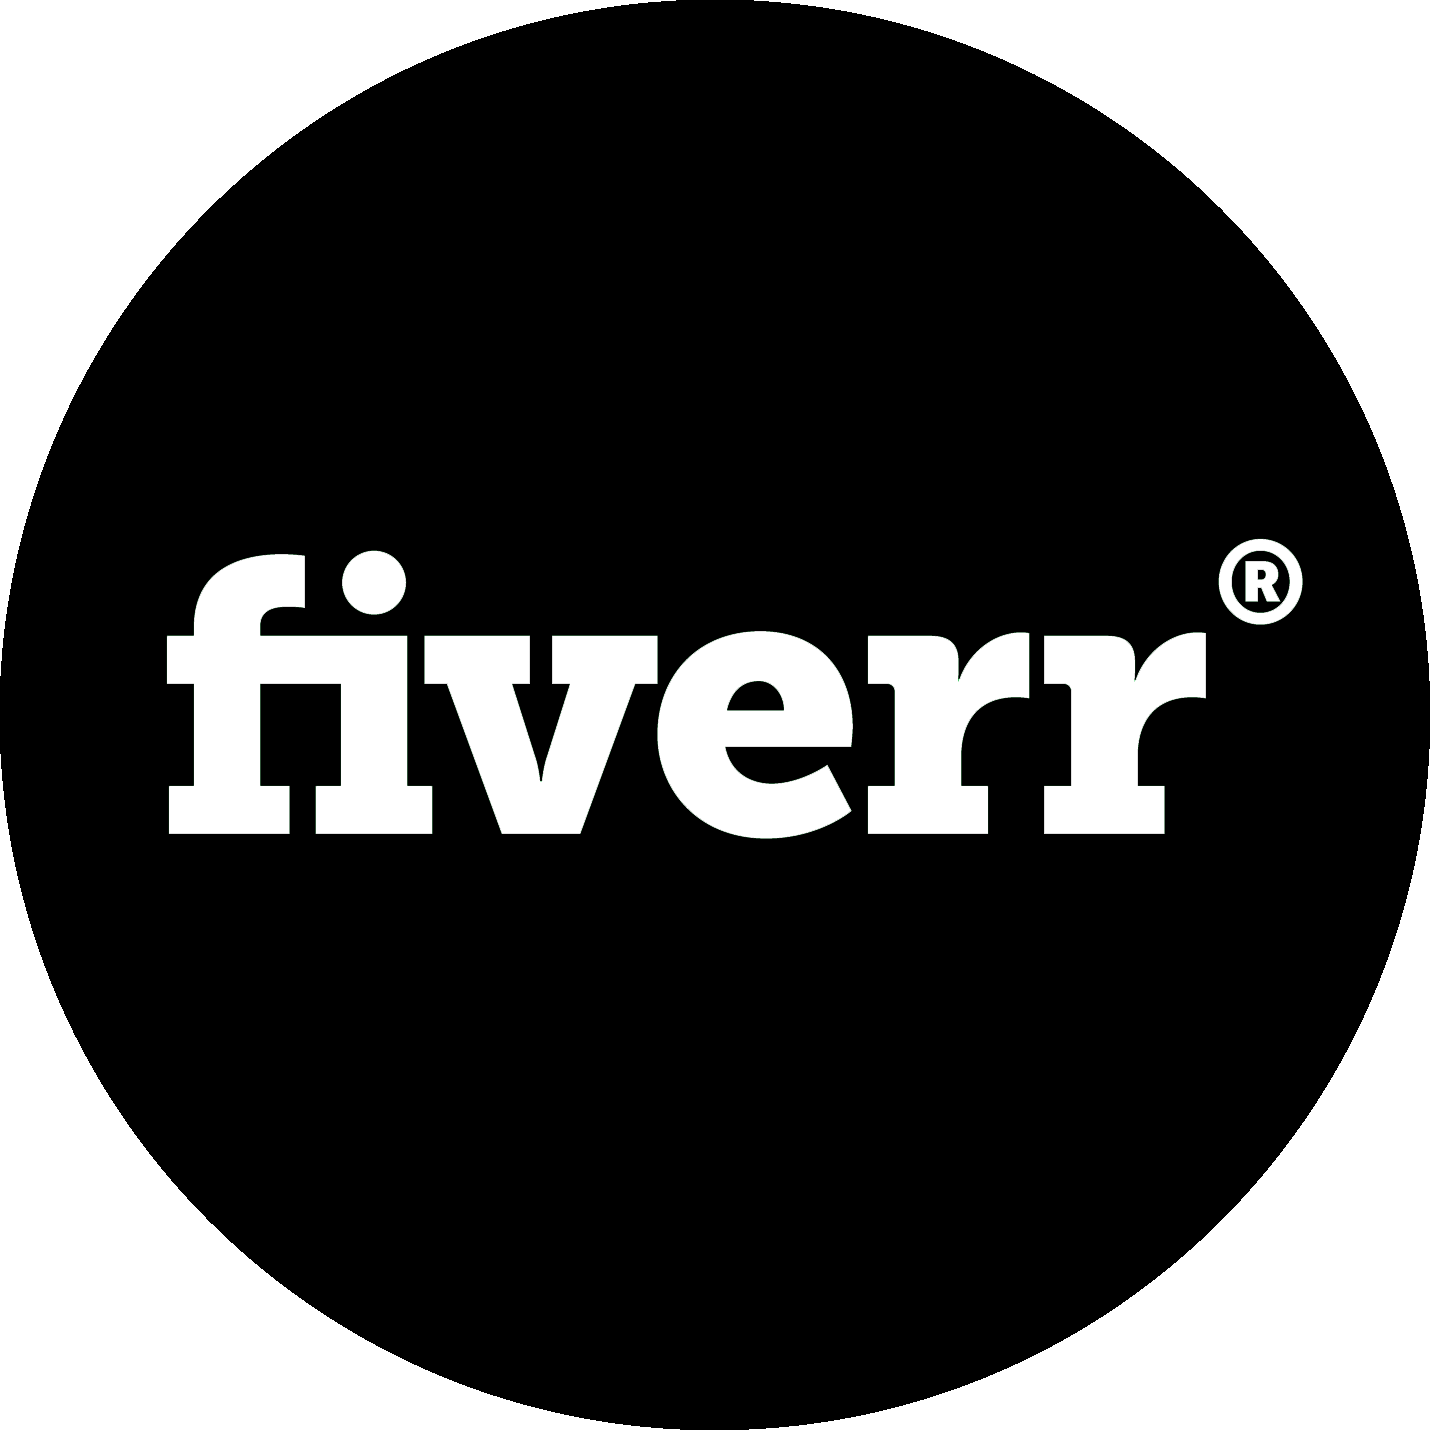  Fiverr  on Twitter Design a logo for Fiverr  s Podcast 